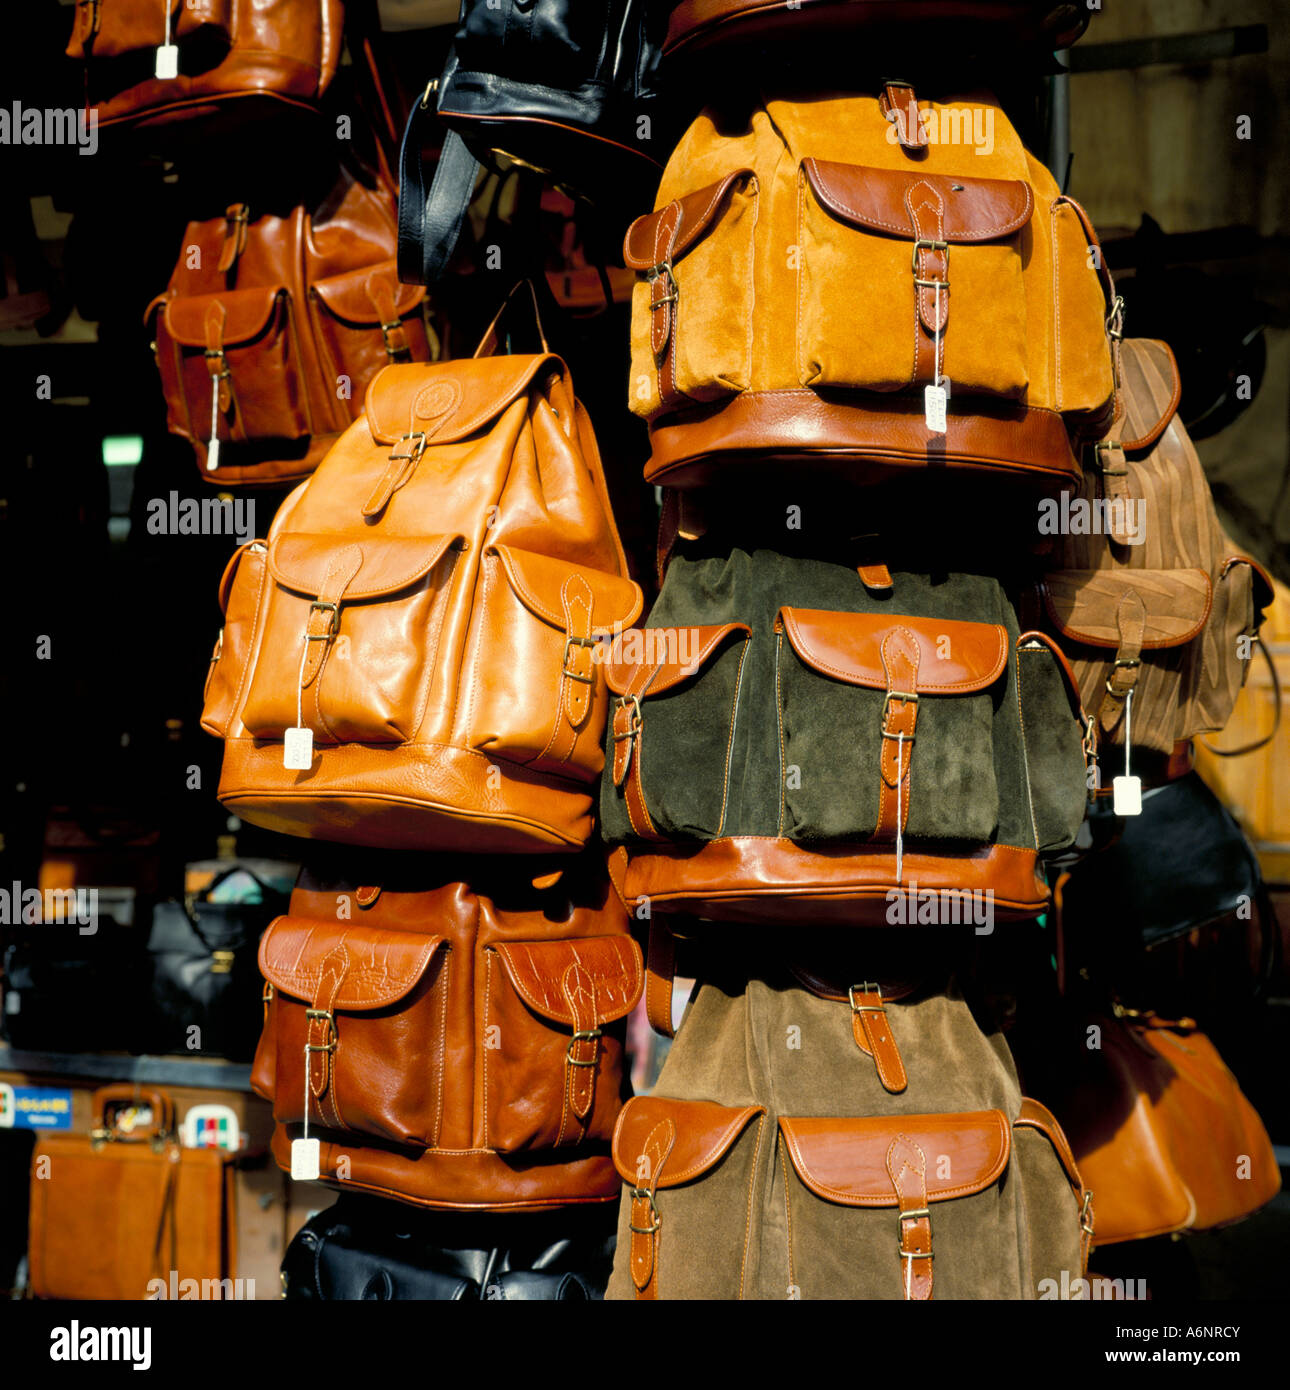 Leather bags for sale San Lorenzo Market Florence Tuscany Italy Europe  Stock Photo - Alamy